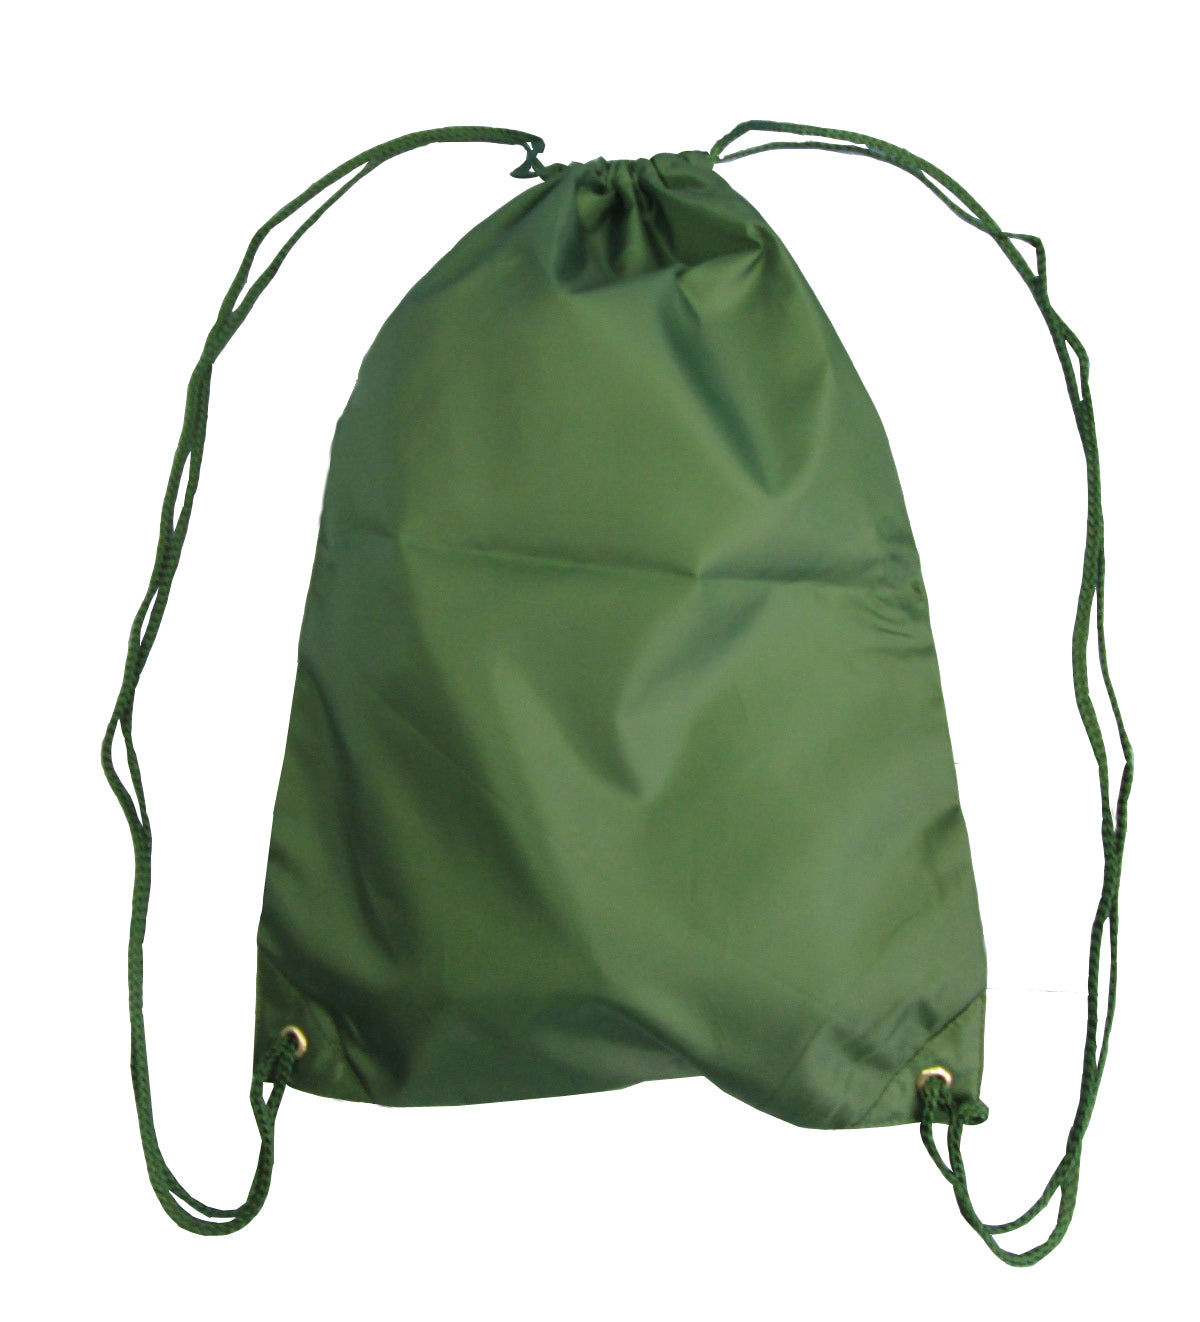 JLSB-0055 Sewn Bag